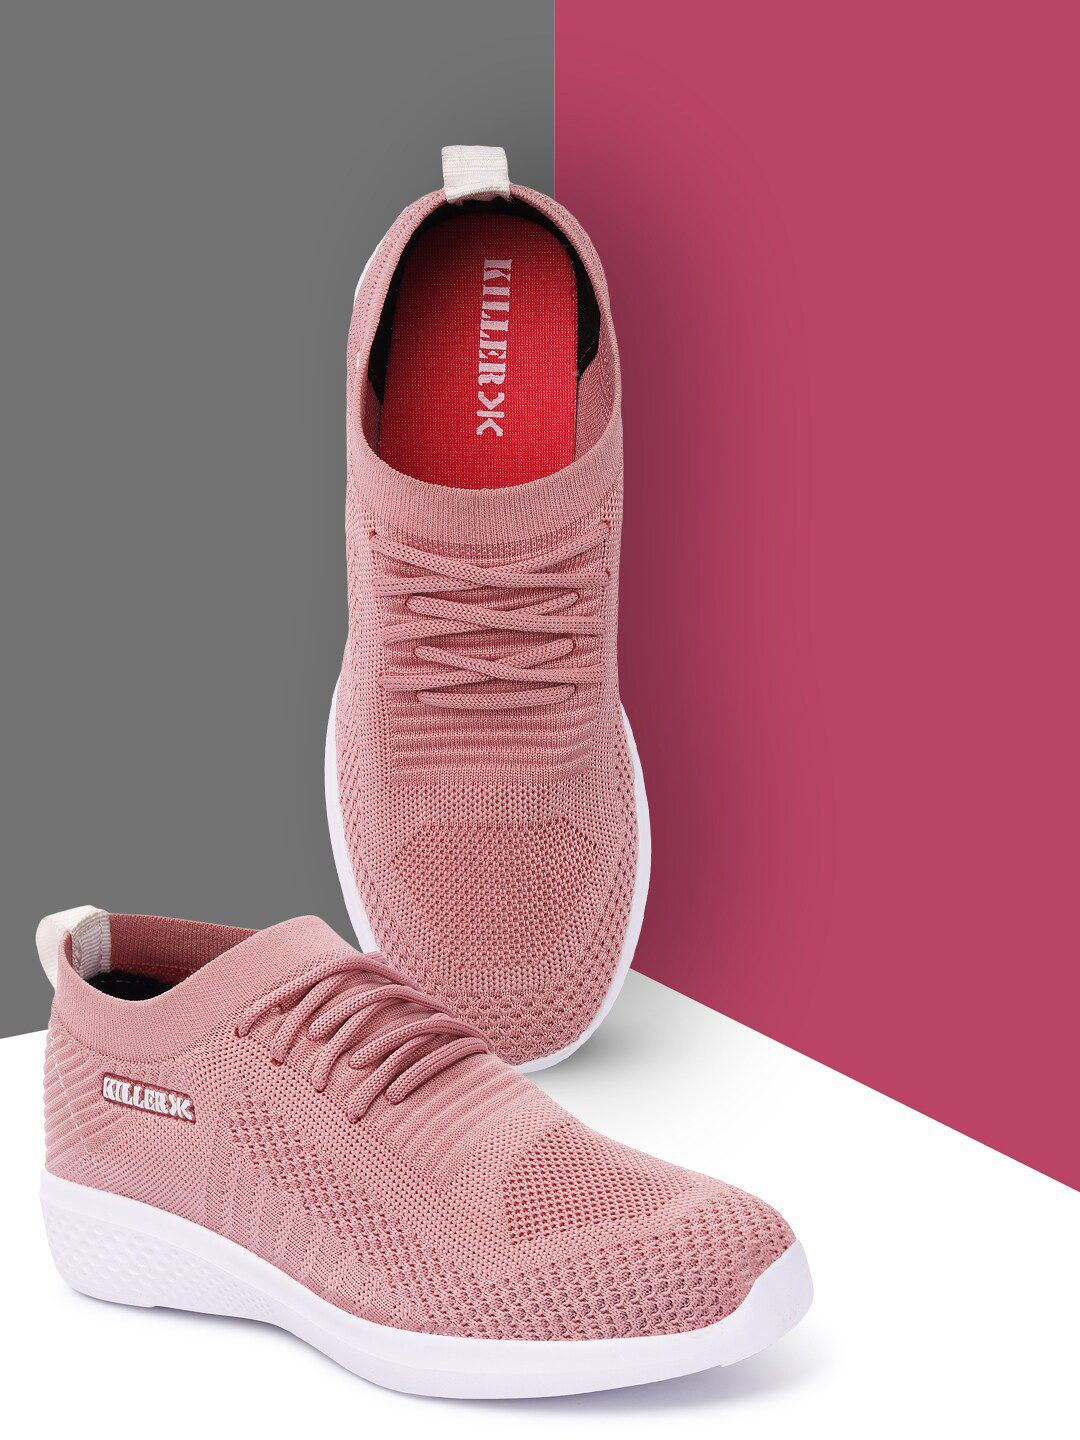 Killer Women Pink Woven Design Sneakers Price in India